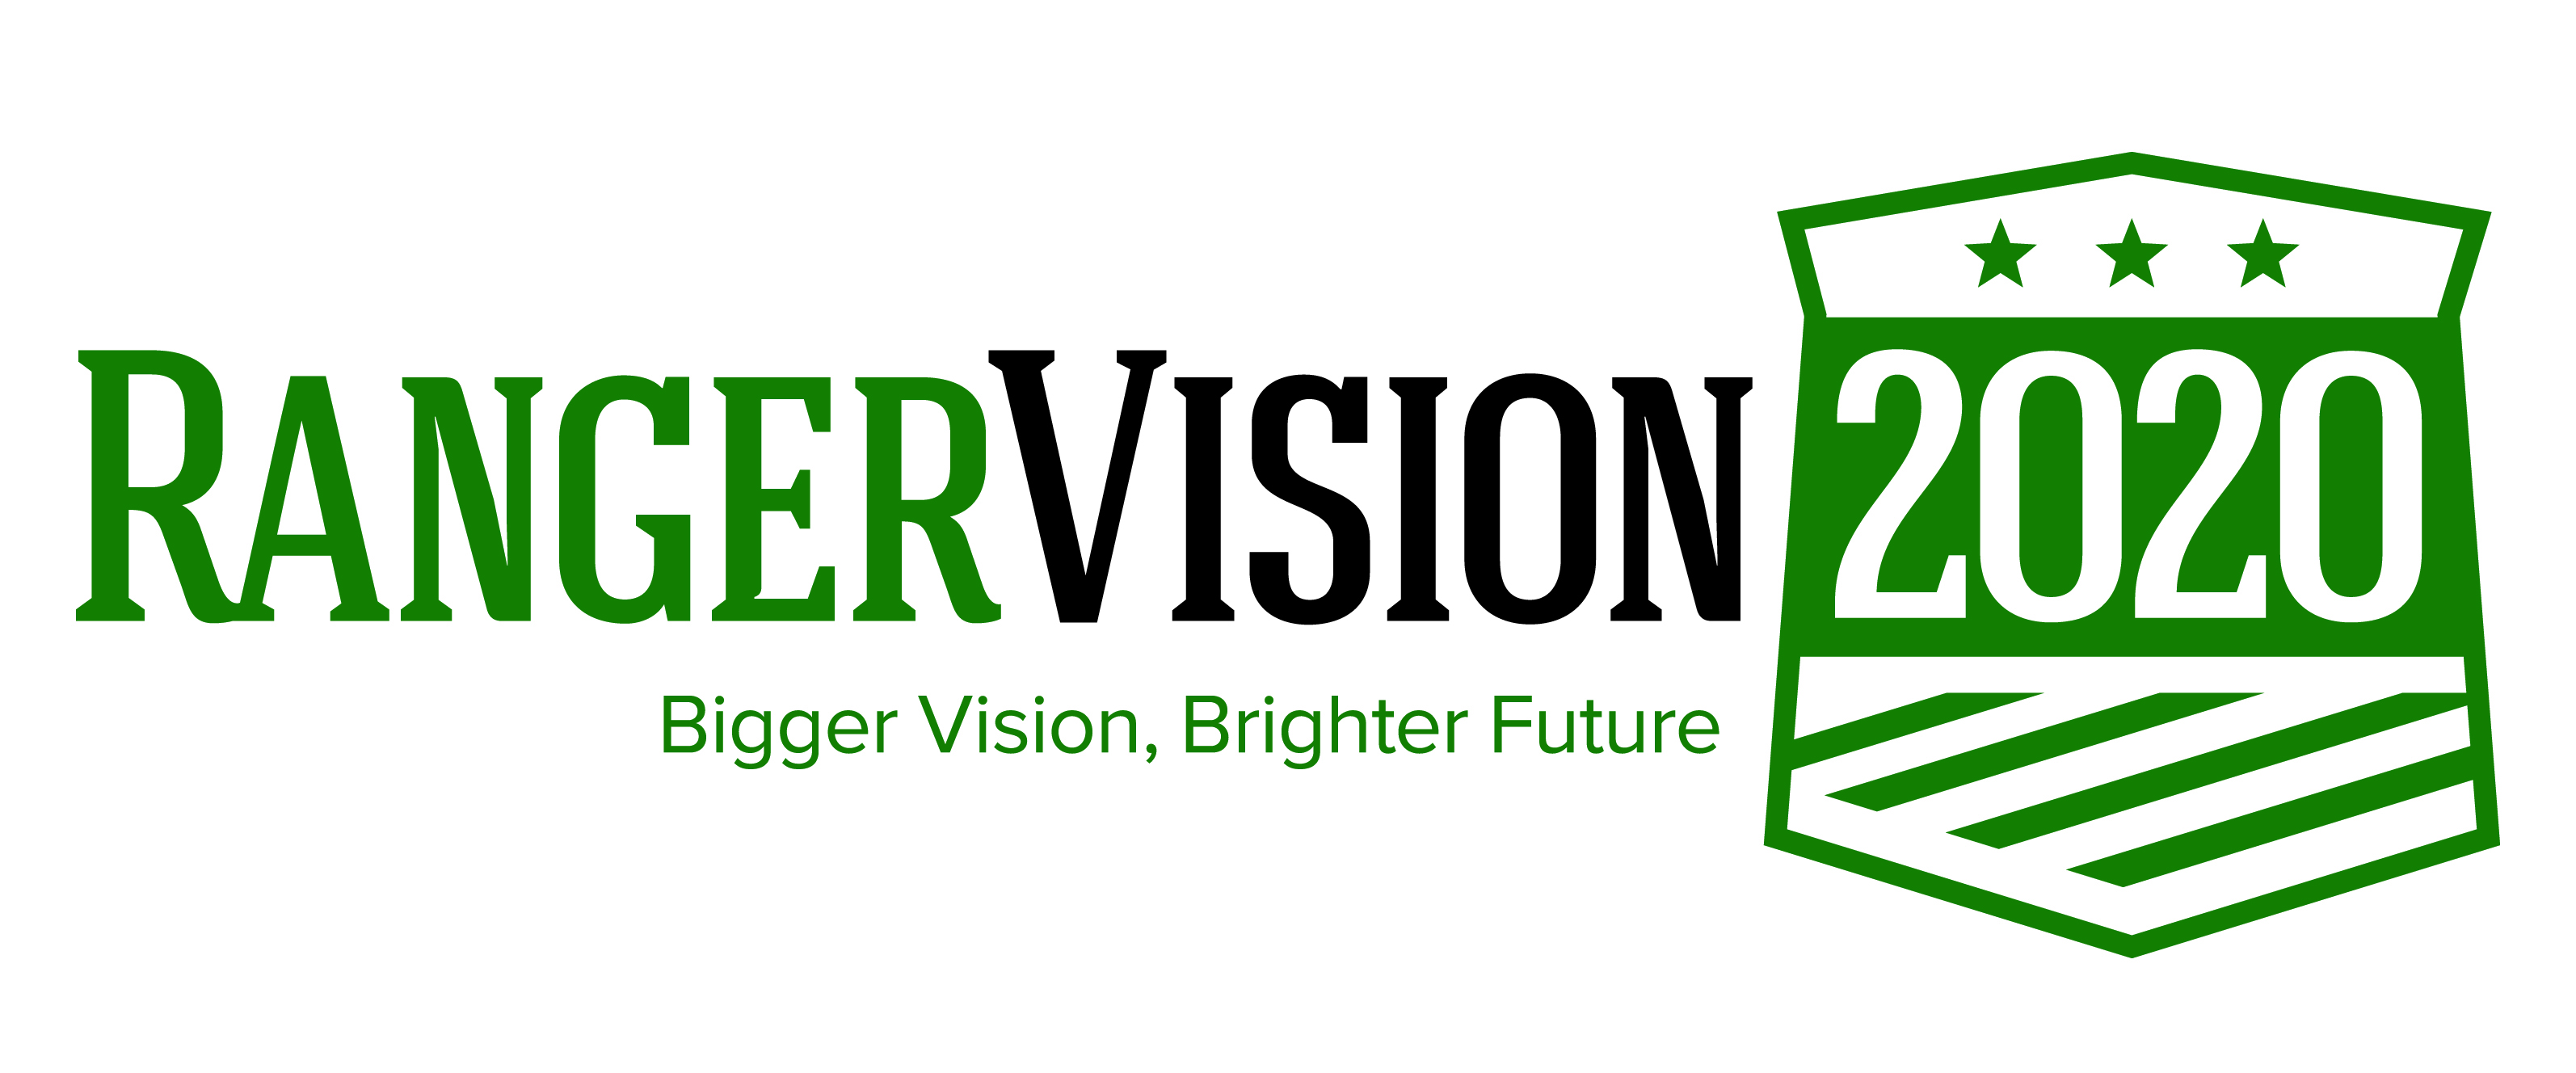 RangerVision 2020 Header Image